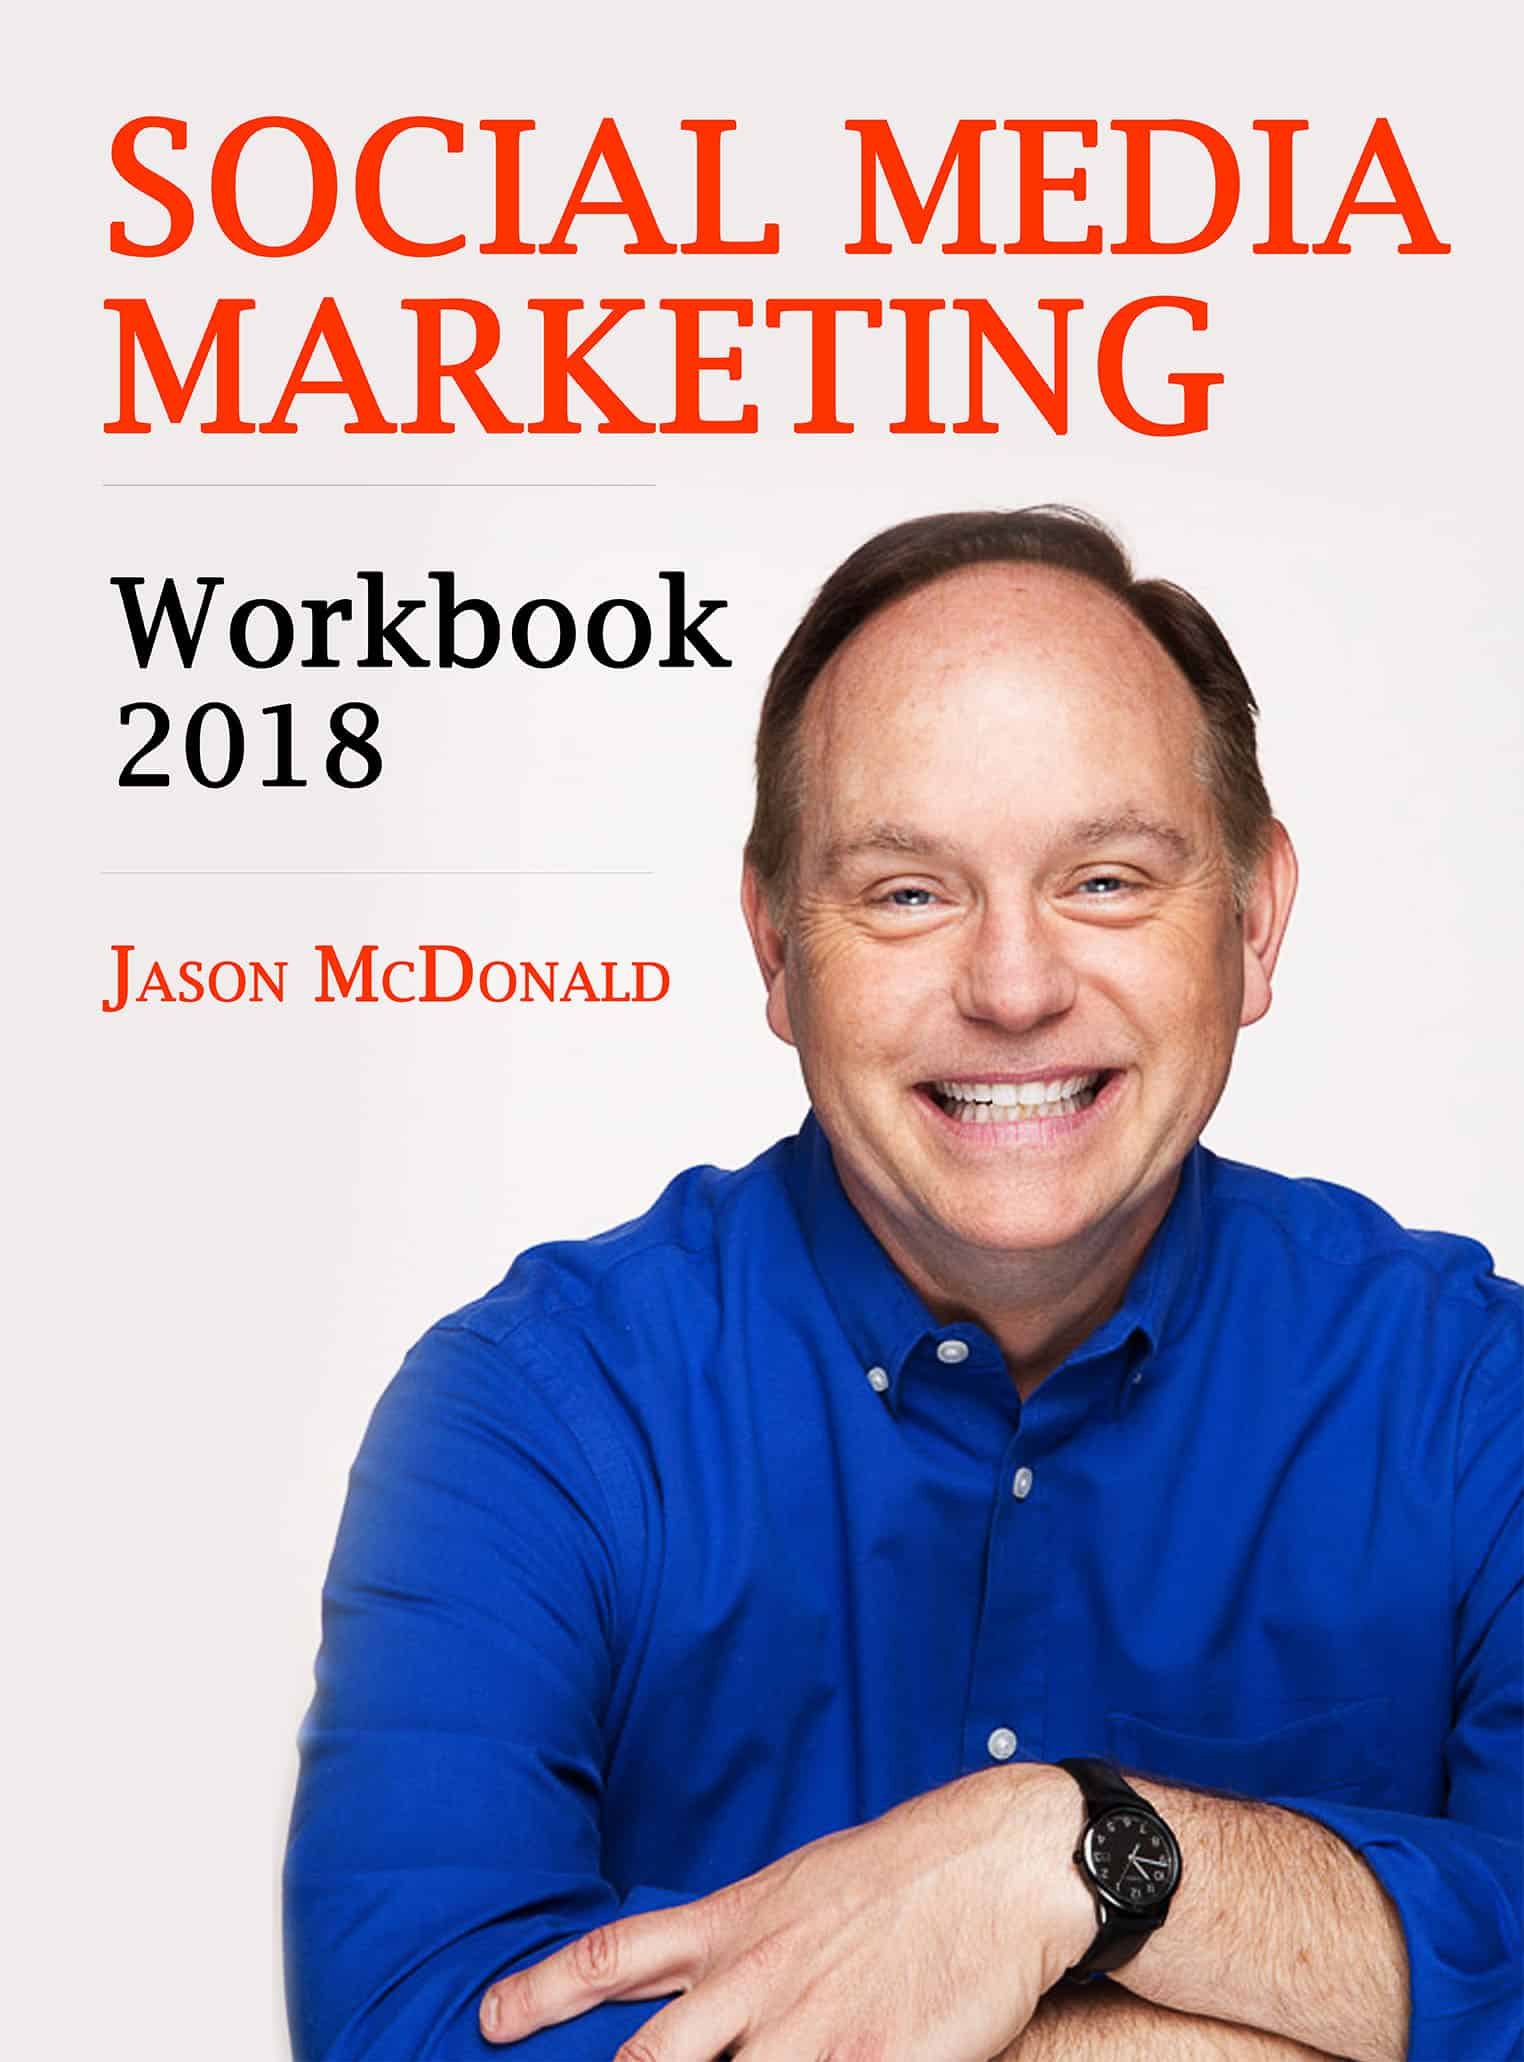 JM Announces New Social Media Marketing Workbook 2018, a Book